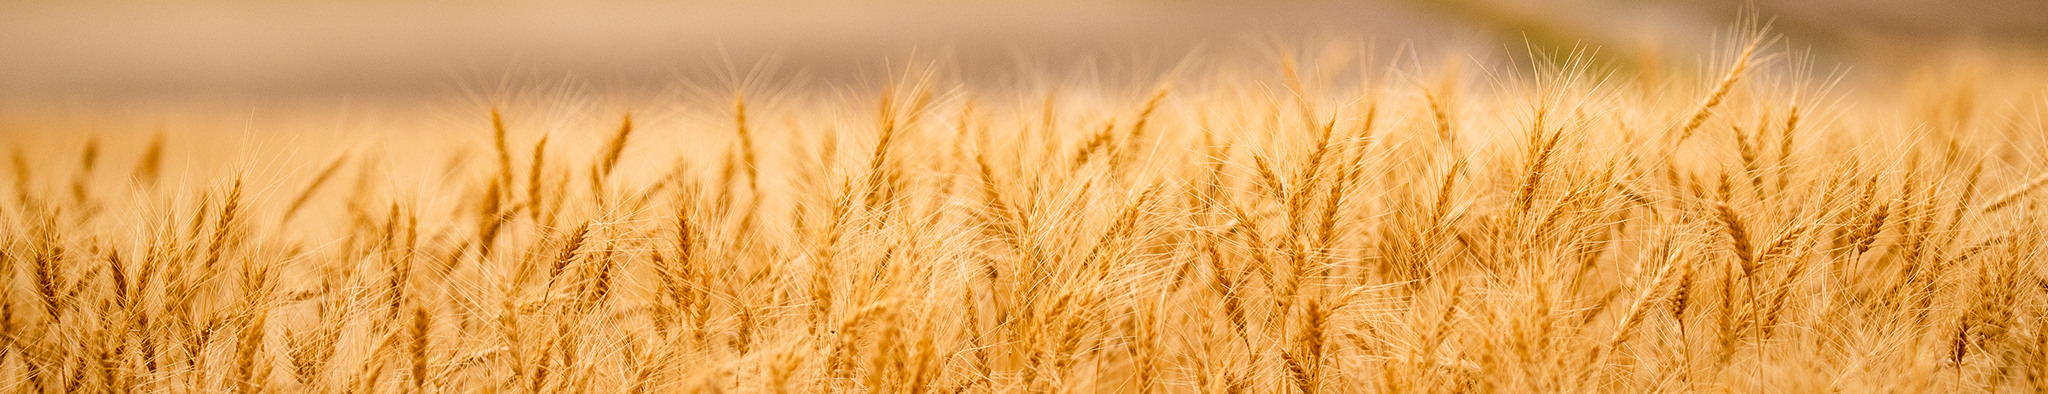 Hero image of wheat field